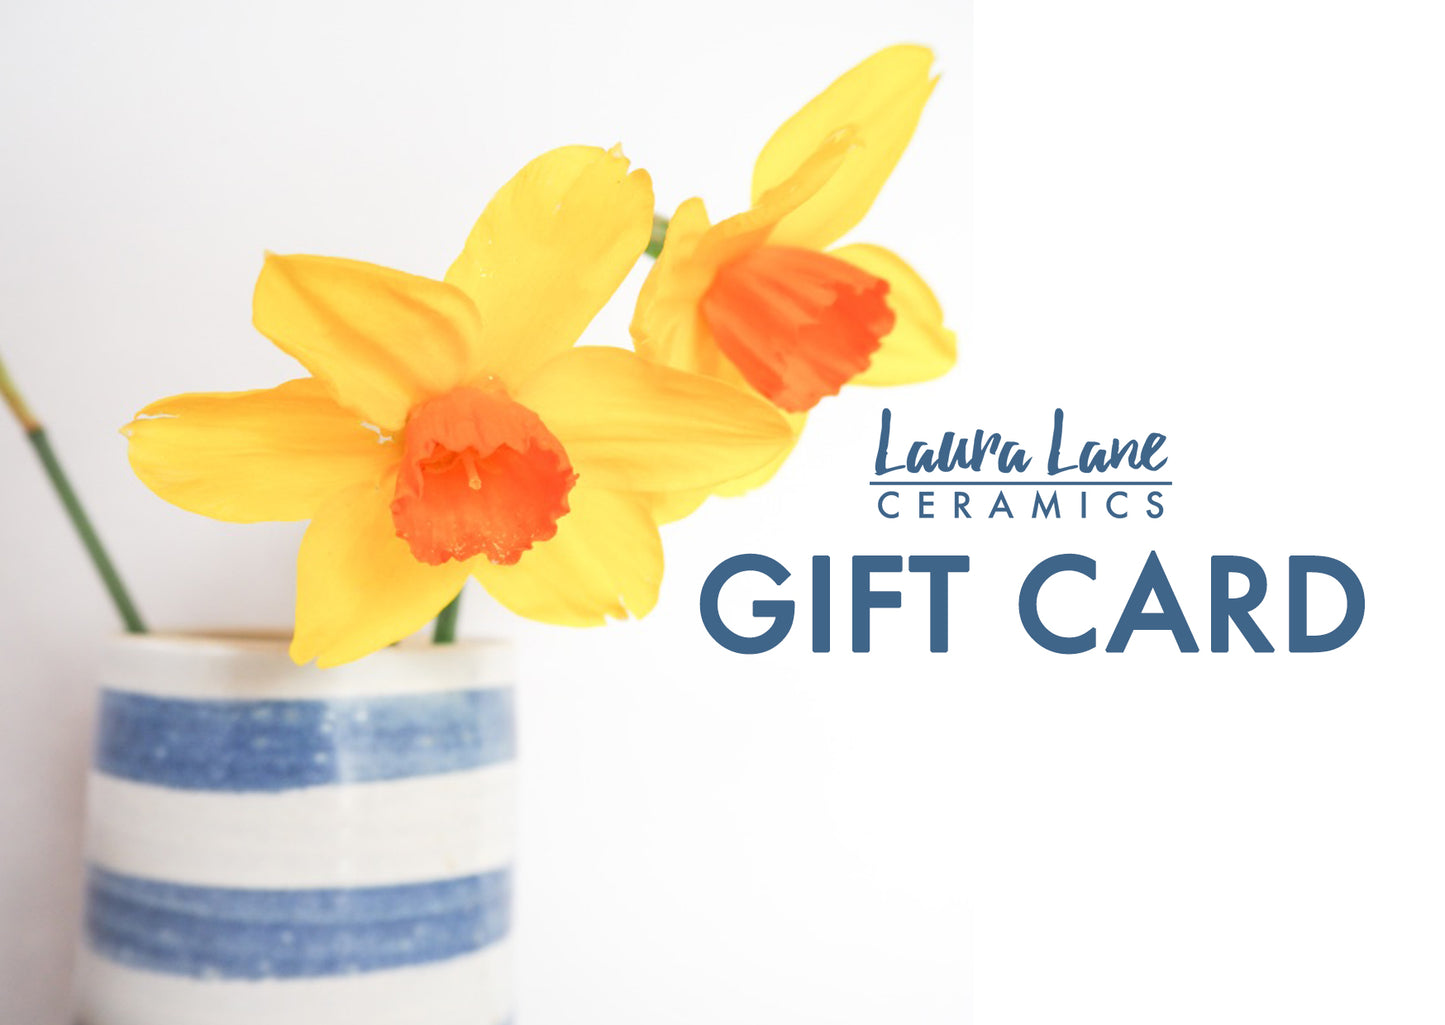 Laura Lane ceramics Gift Card